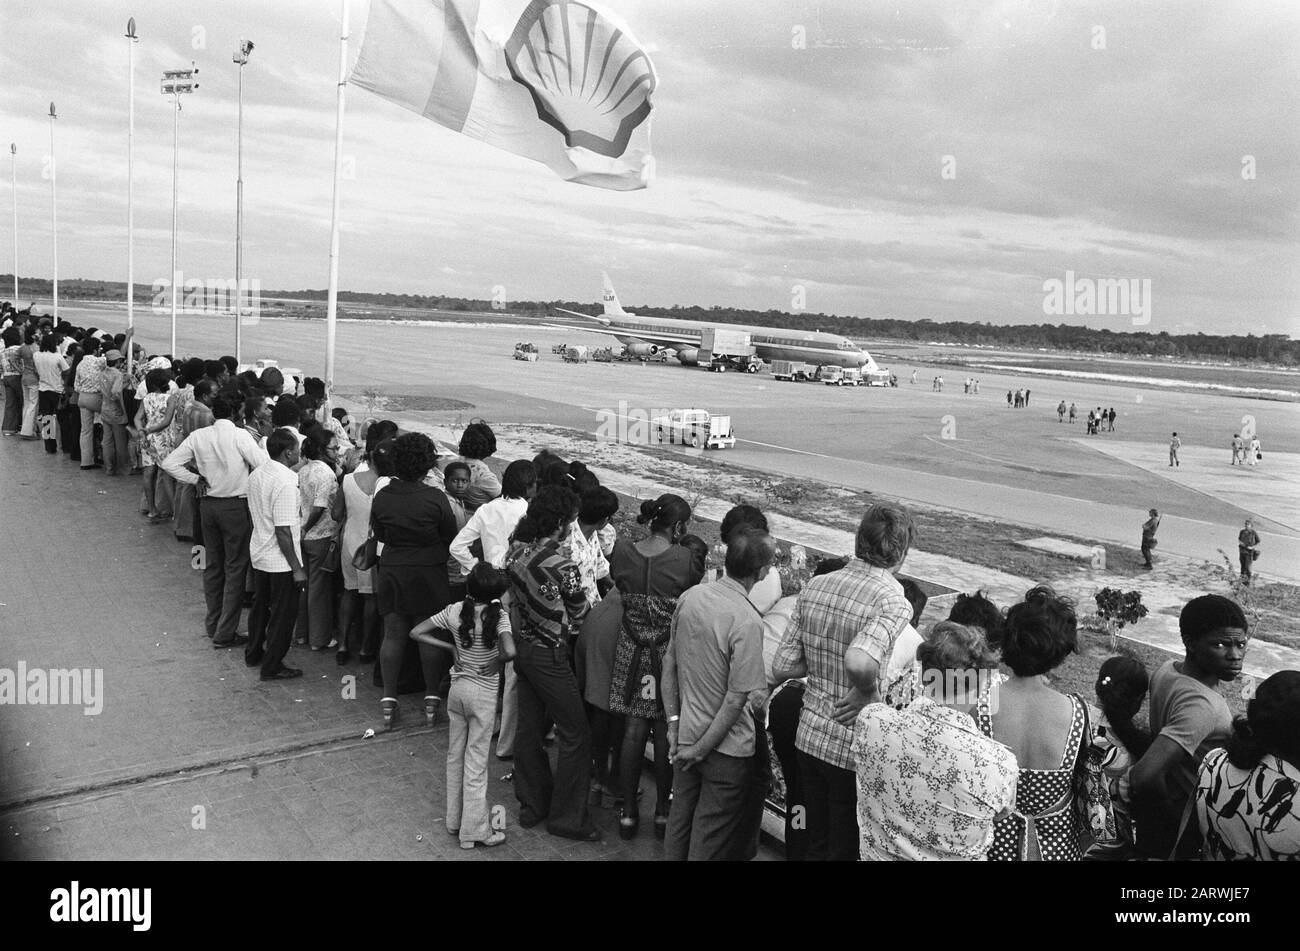 Suriname, airport Zanderij; crowd on pier Date: April 1, 1975 Keywords ...